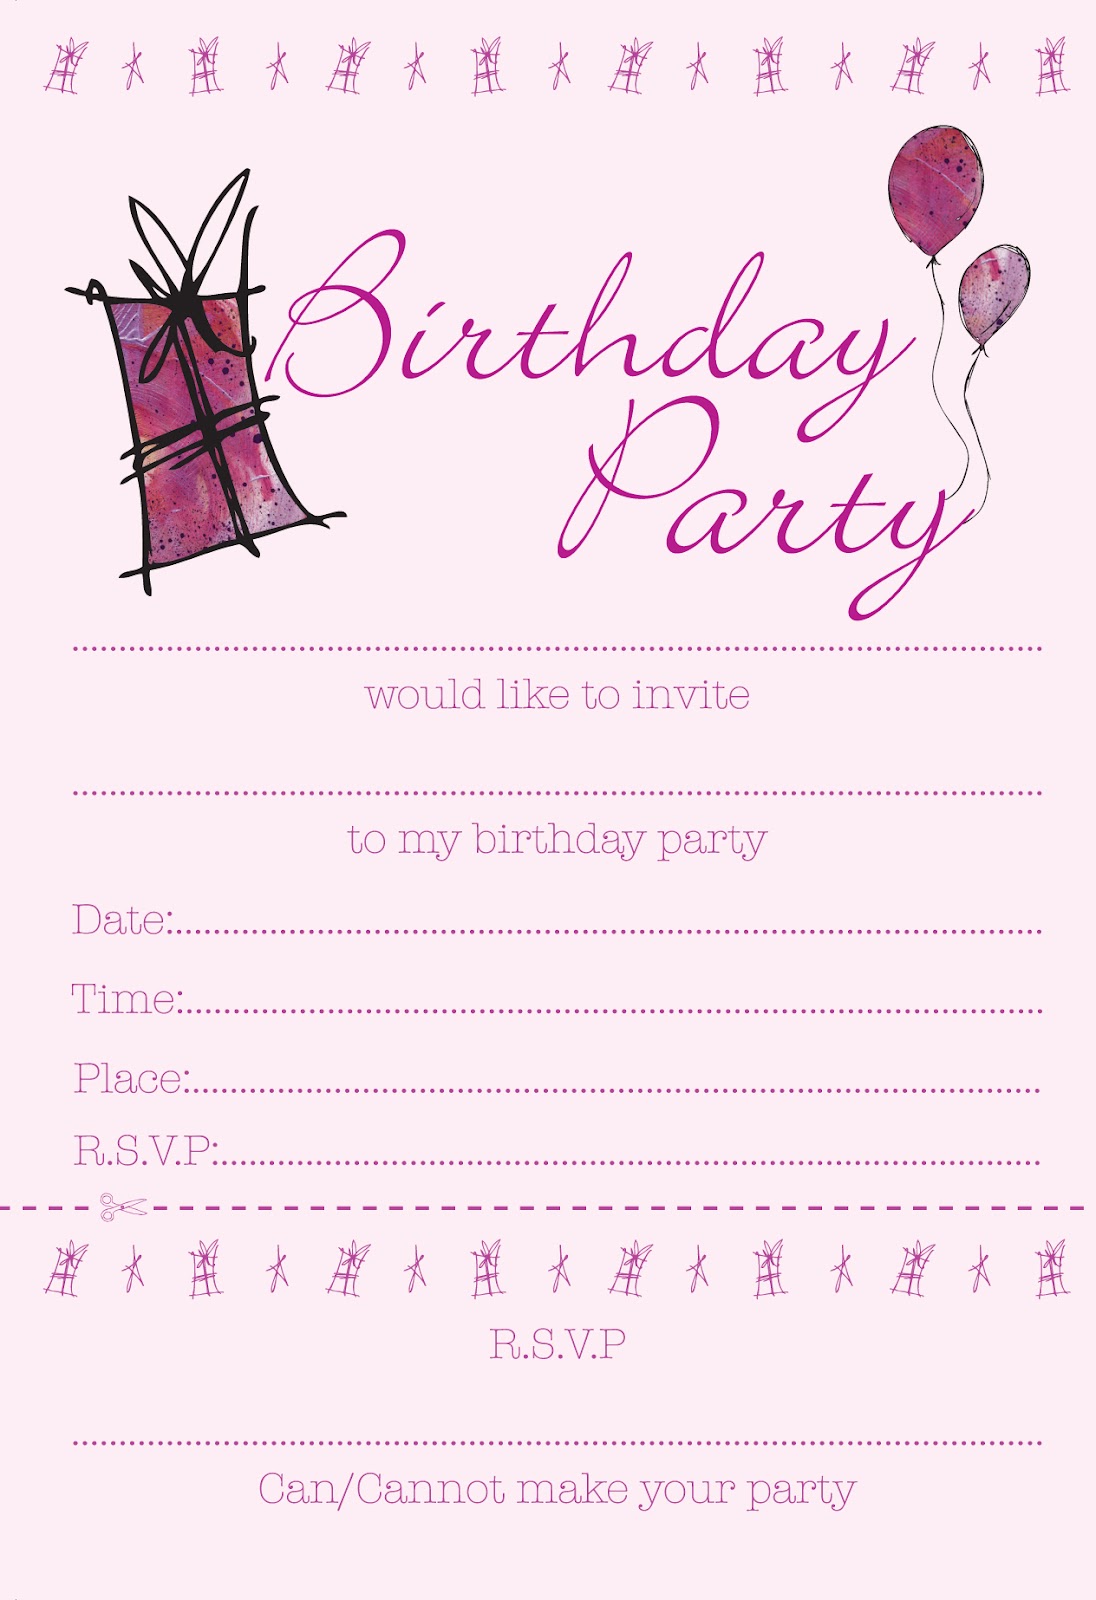 free-free-birthday-party-invites-for-kids-kids-birthday-party-invitations-party-invitations